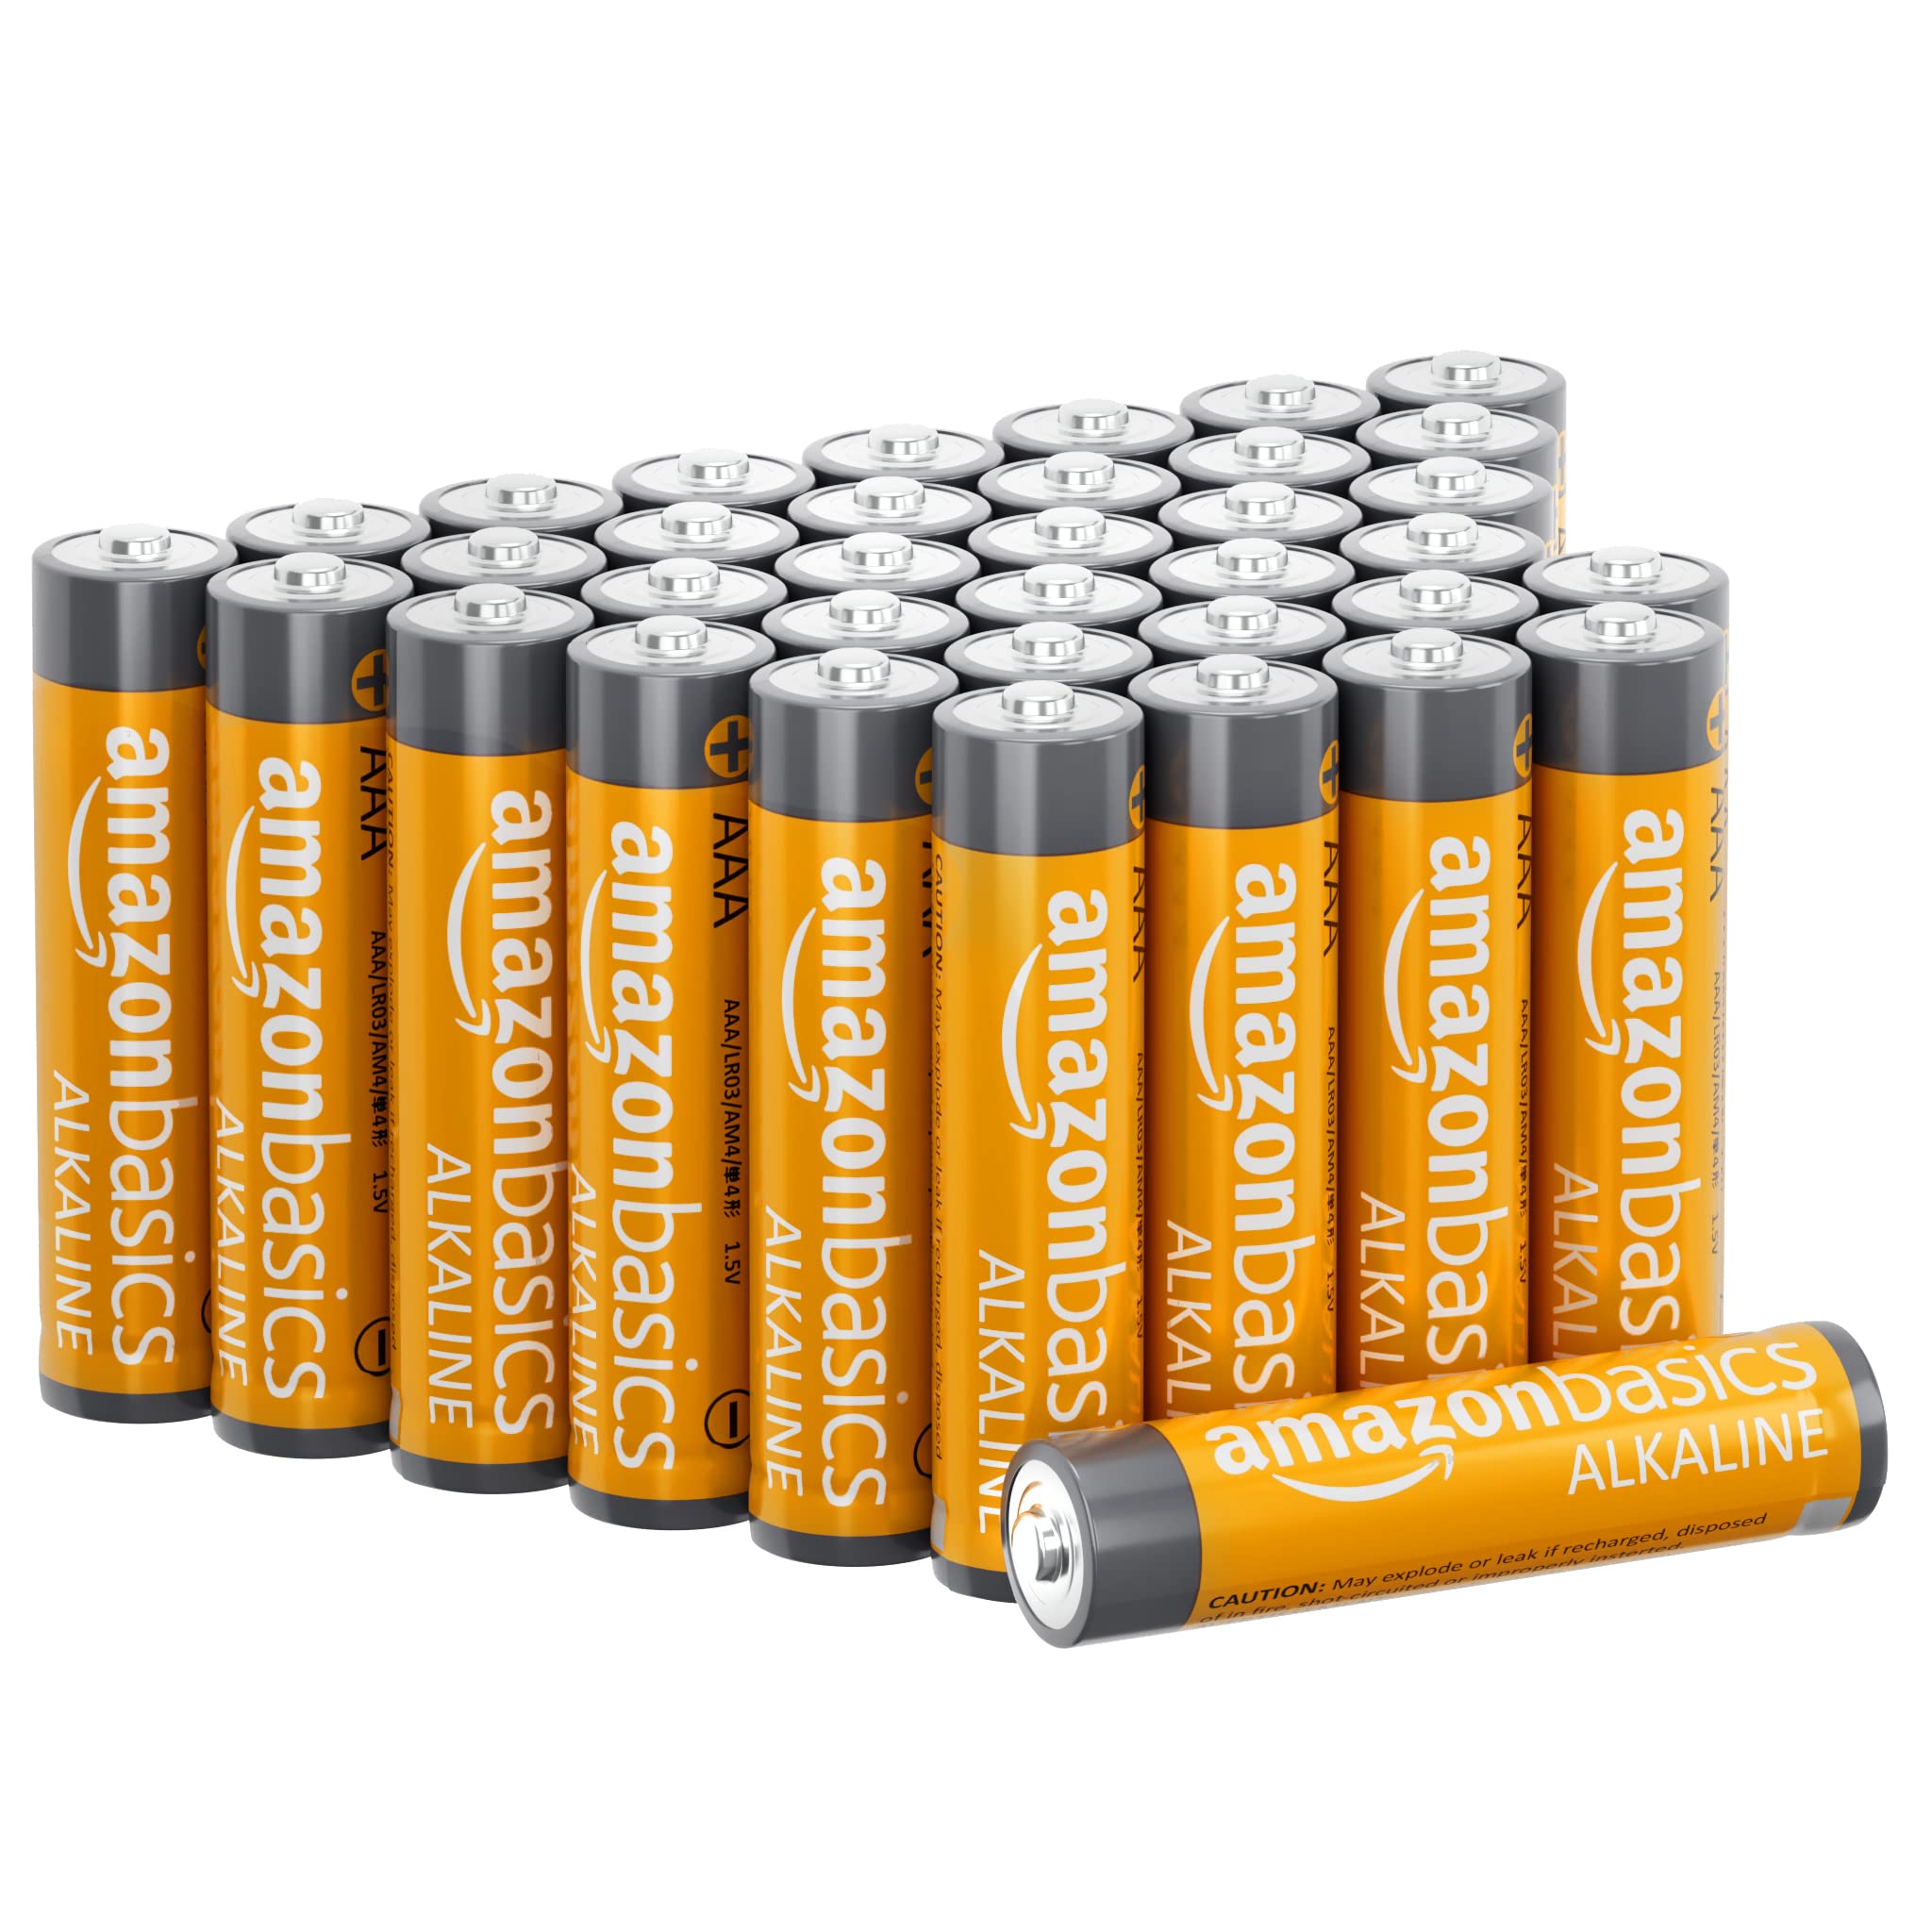 Basics 36 Pack AAA High-Performance Alkaline Batteries, 10